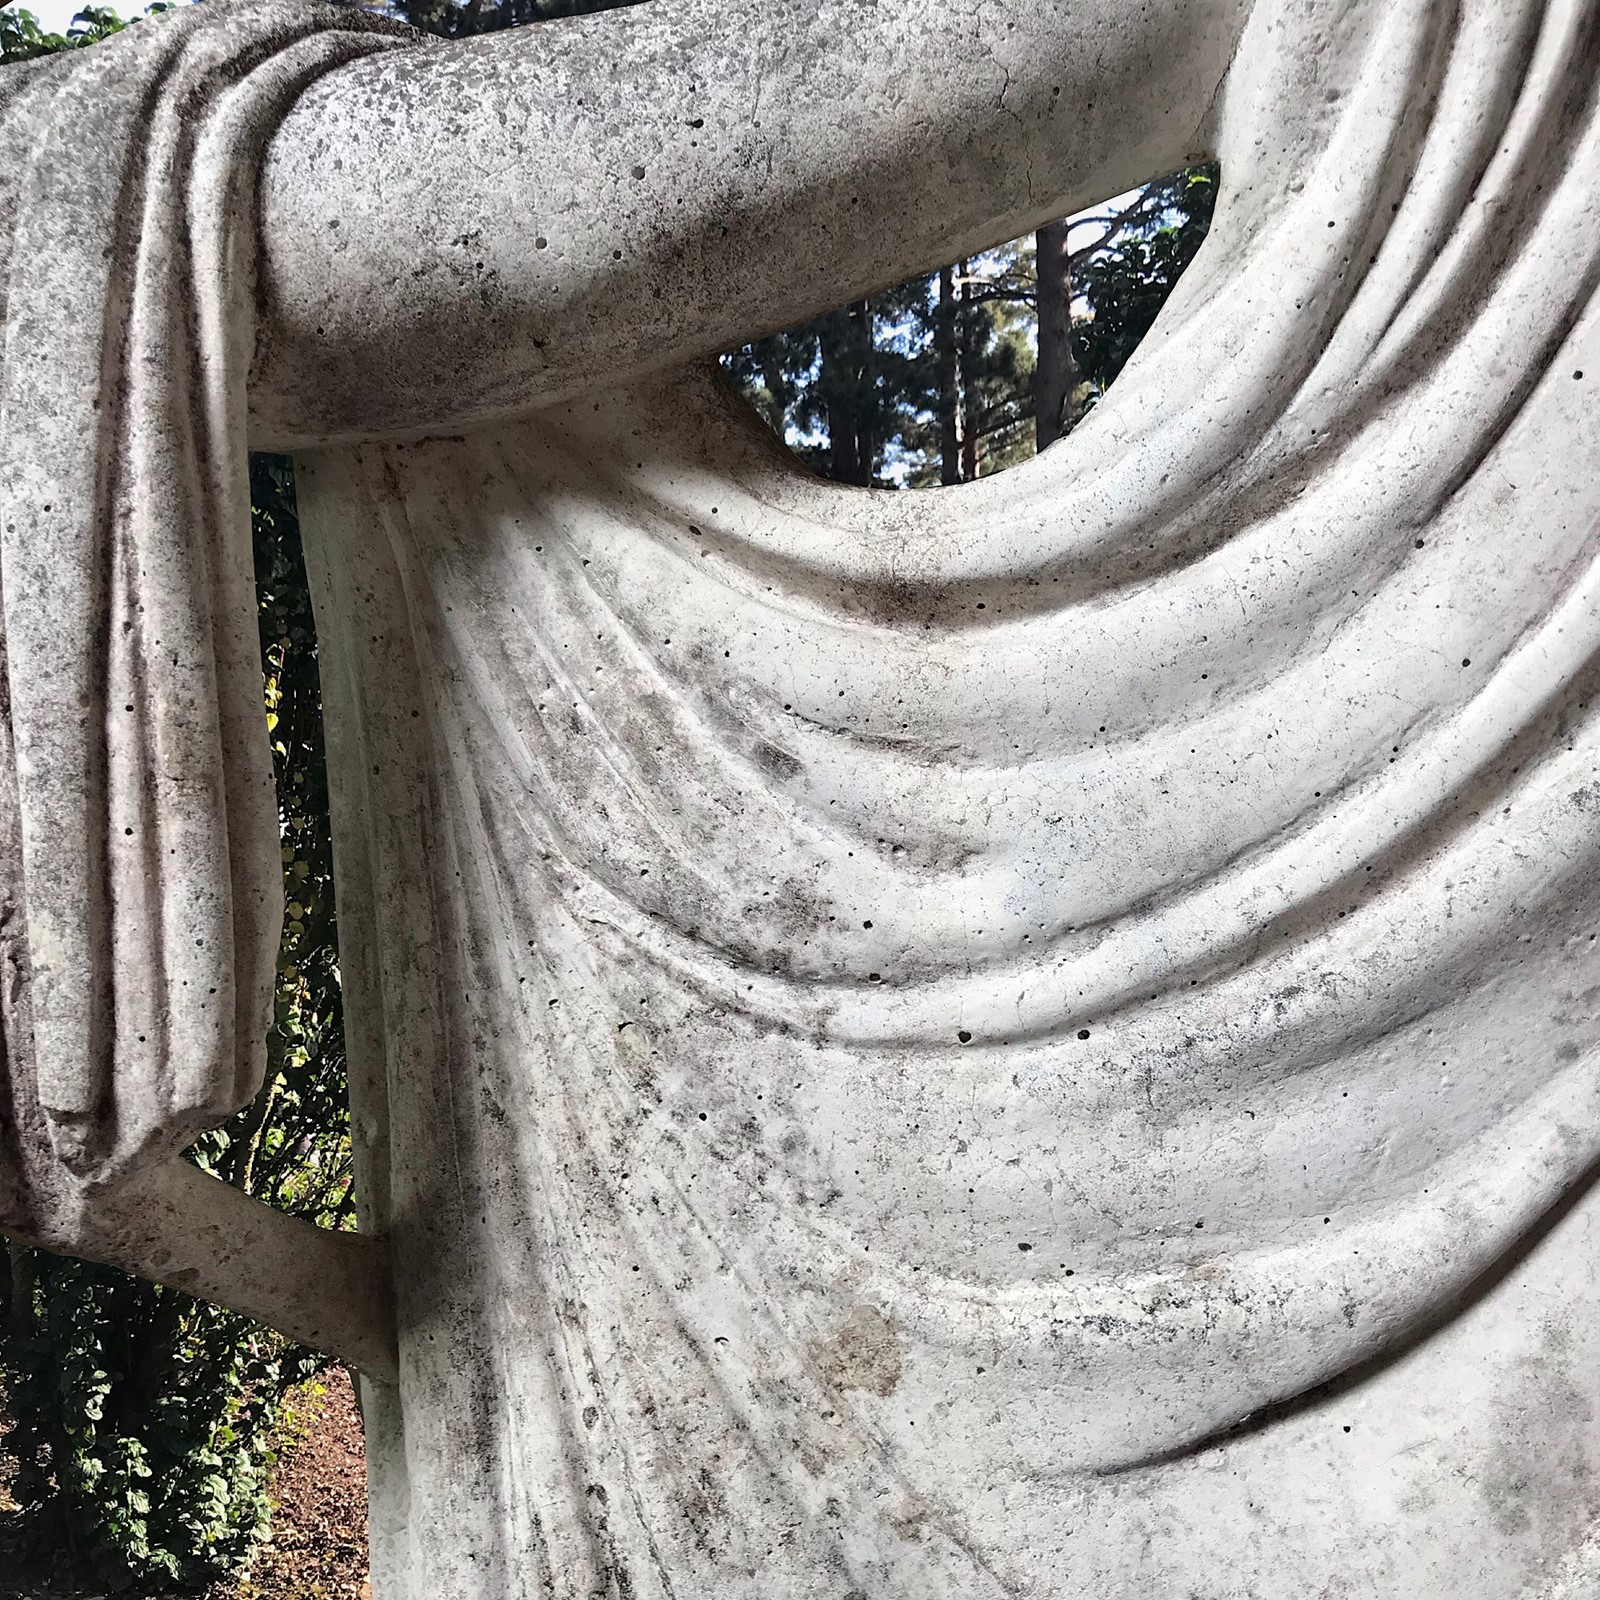 Apollo Belvedere Bust on Roman Plinth - Design Toscano